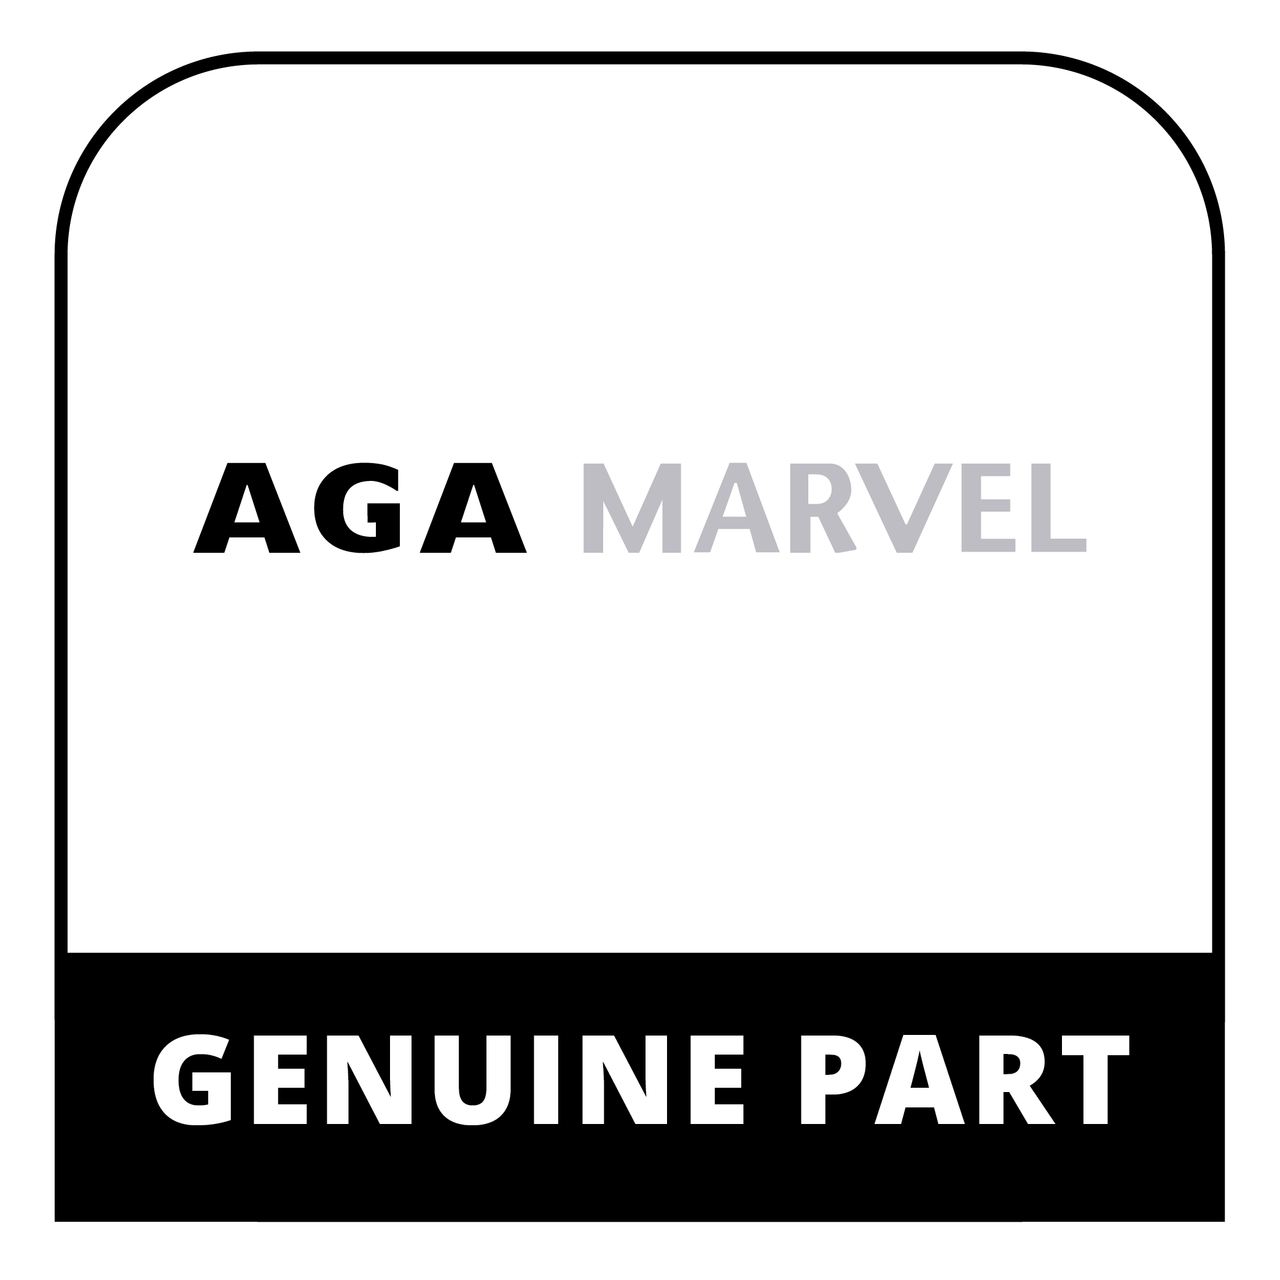 AGA Marvel P027640 - Insulation- Tall Oven Door - Genuine AGA Marvel Part